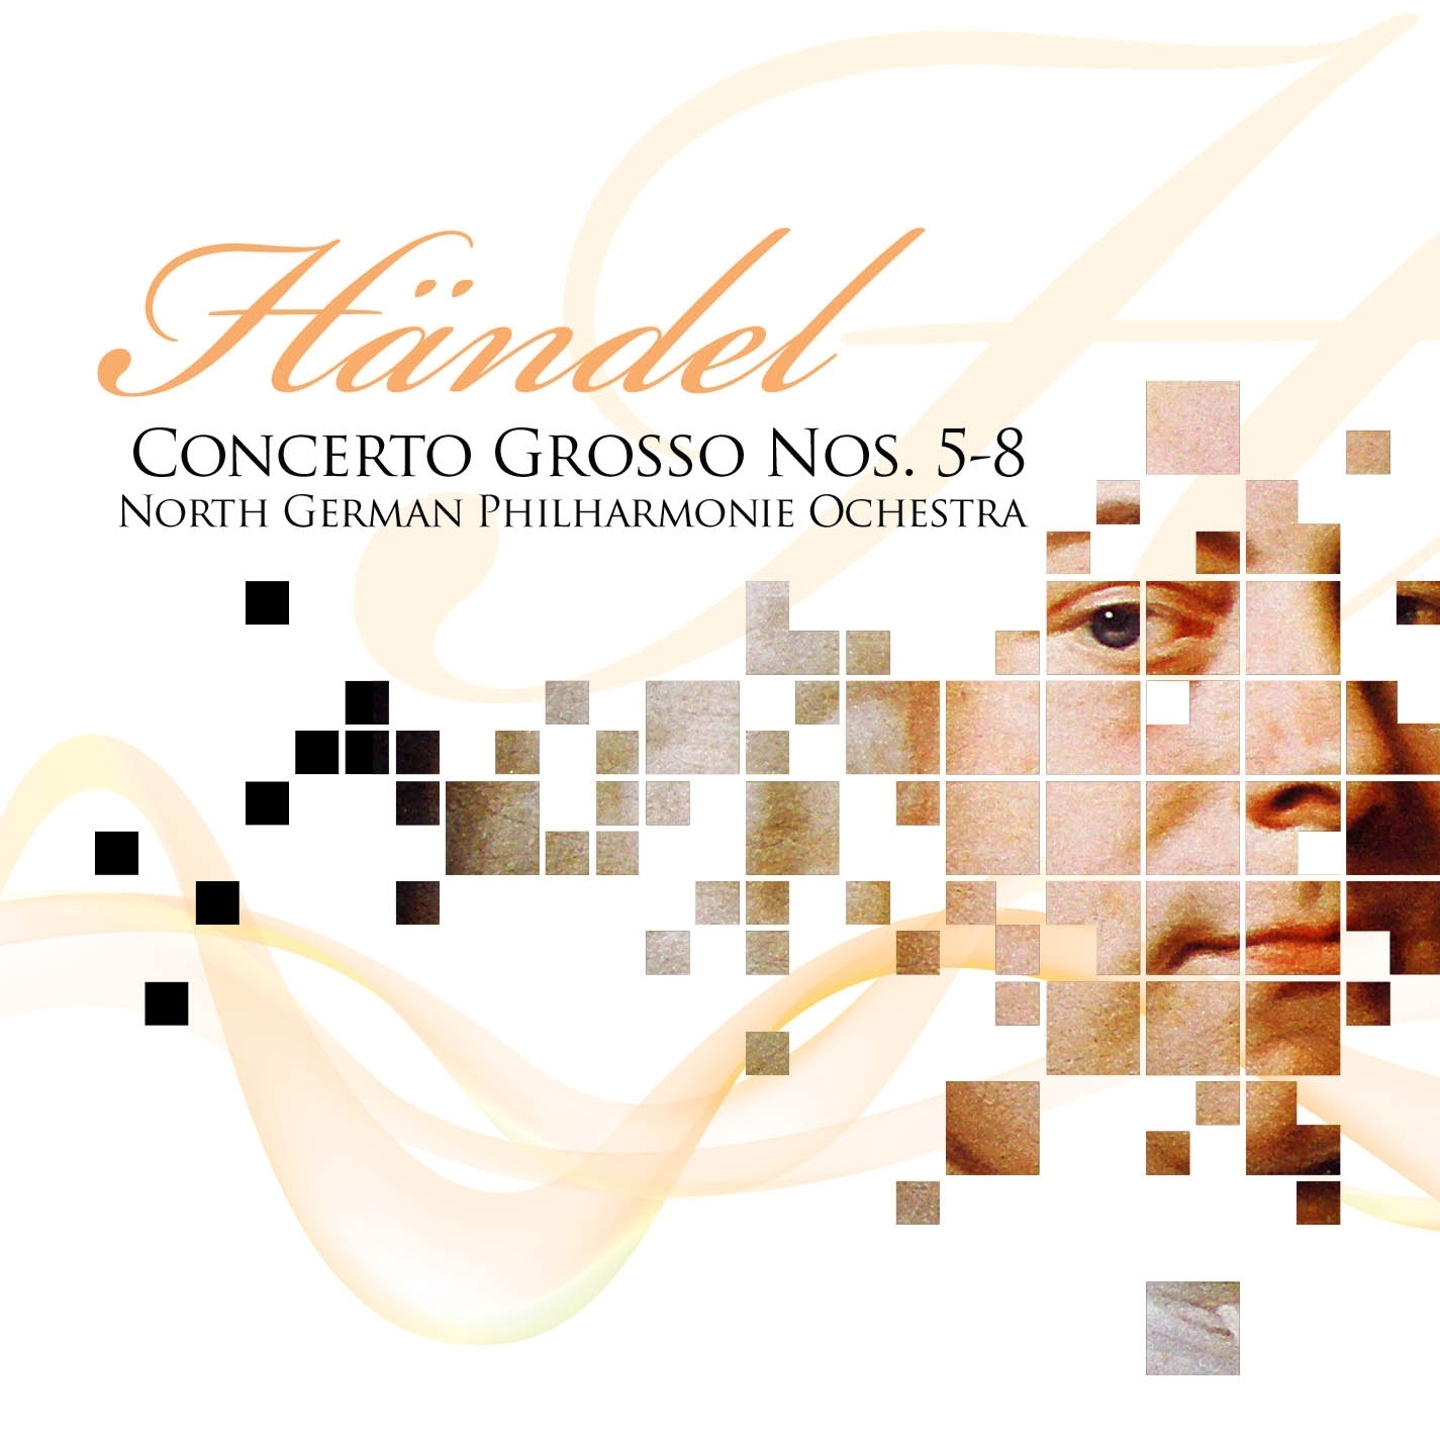 Concerto Grosso No. 7, in B-Flat Major, Op. 6 : Andante